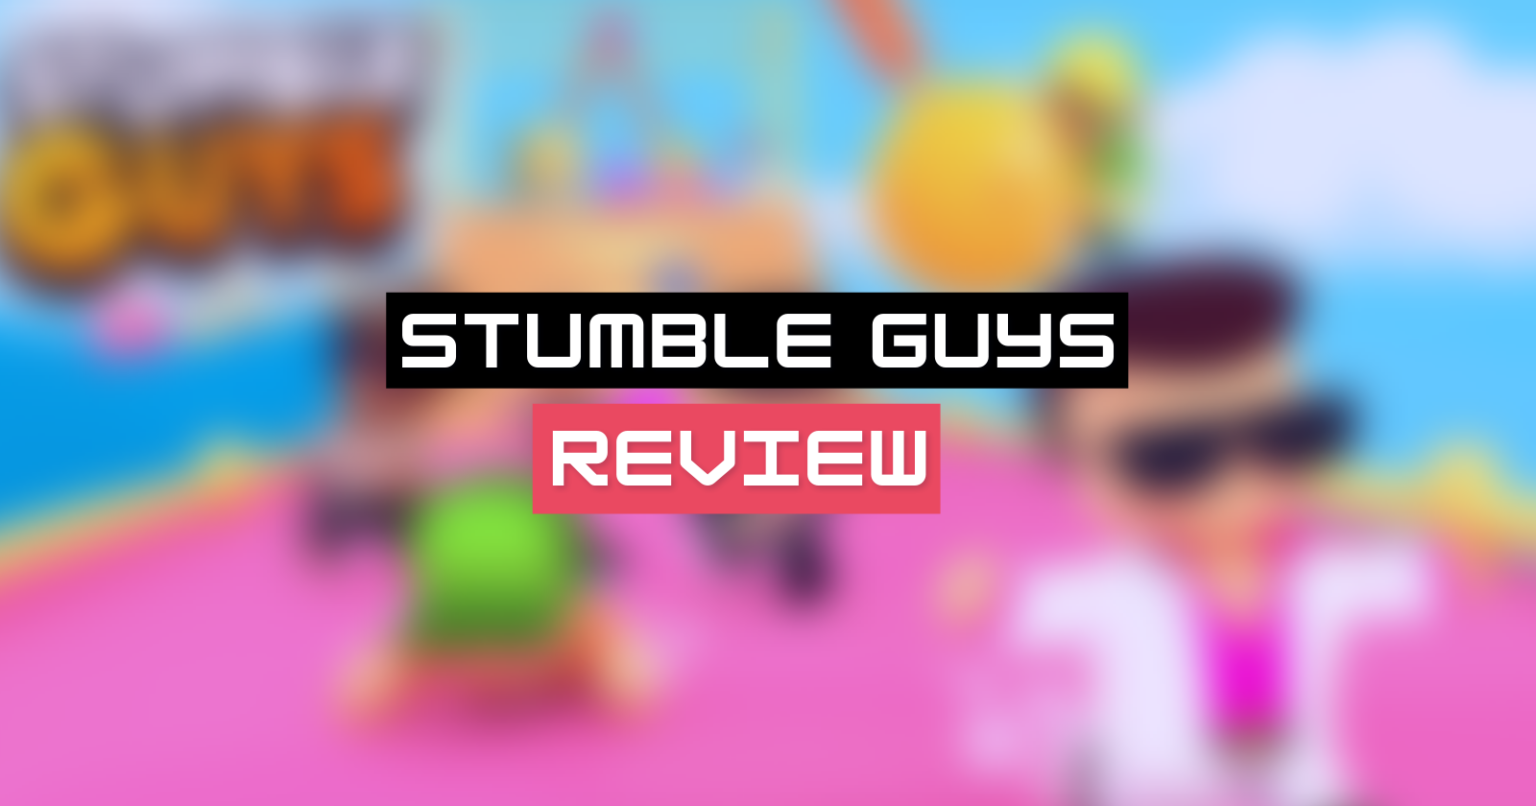 Stumble Fall Boys free downloads